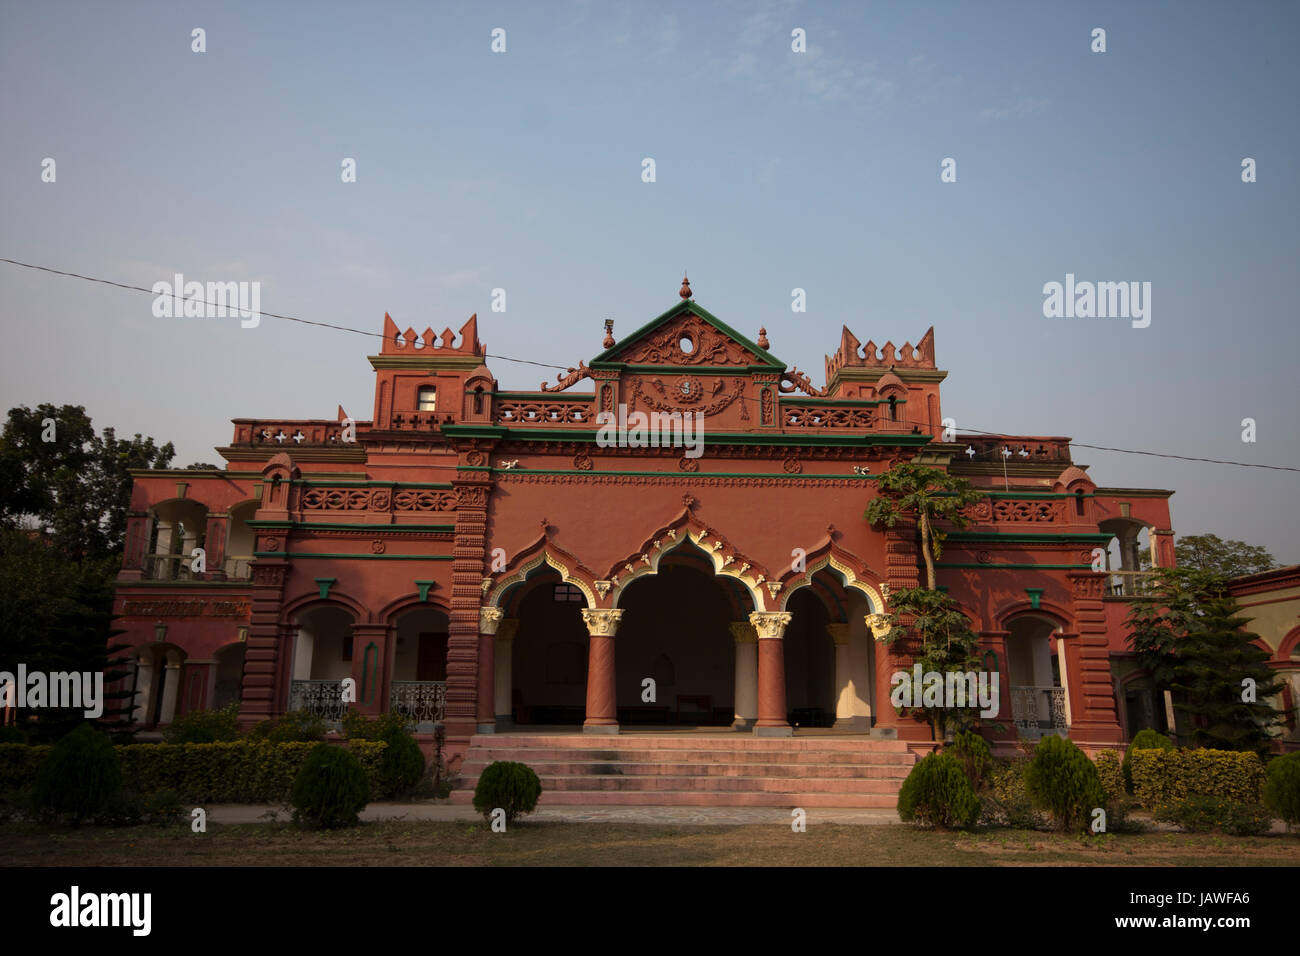 Kalicharan Lodge of Mohera Zamider's Palace at Mirzapur in Tangail. Bangladesh. Stock Photo